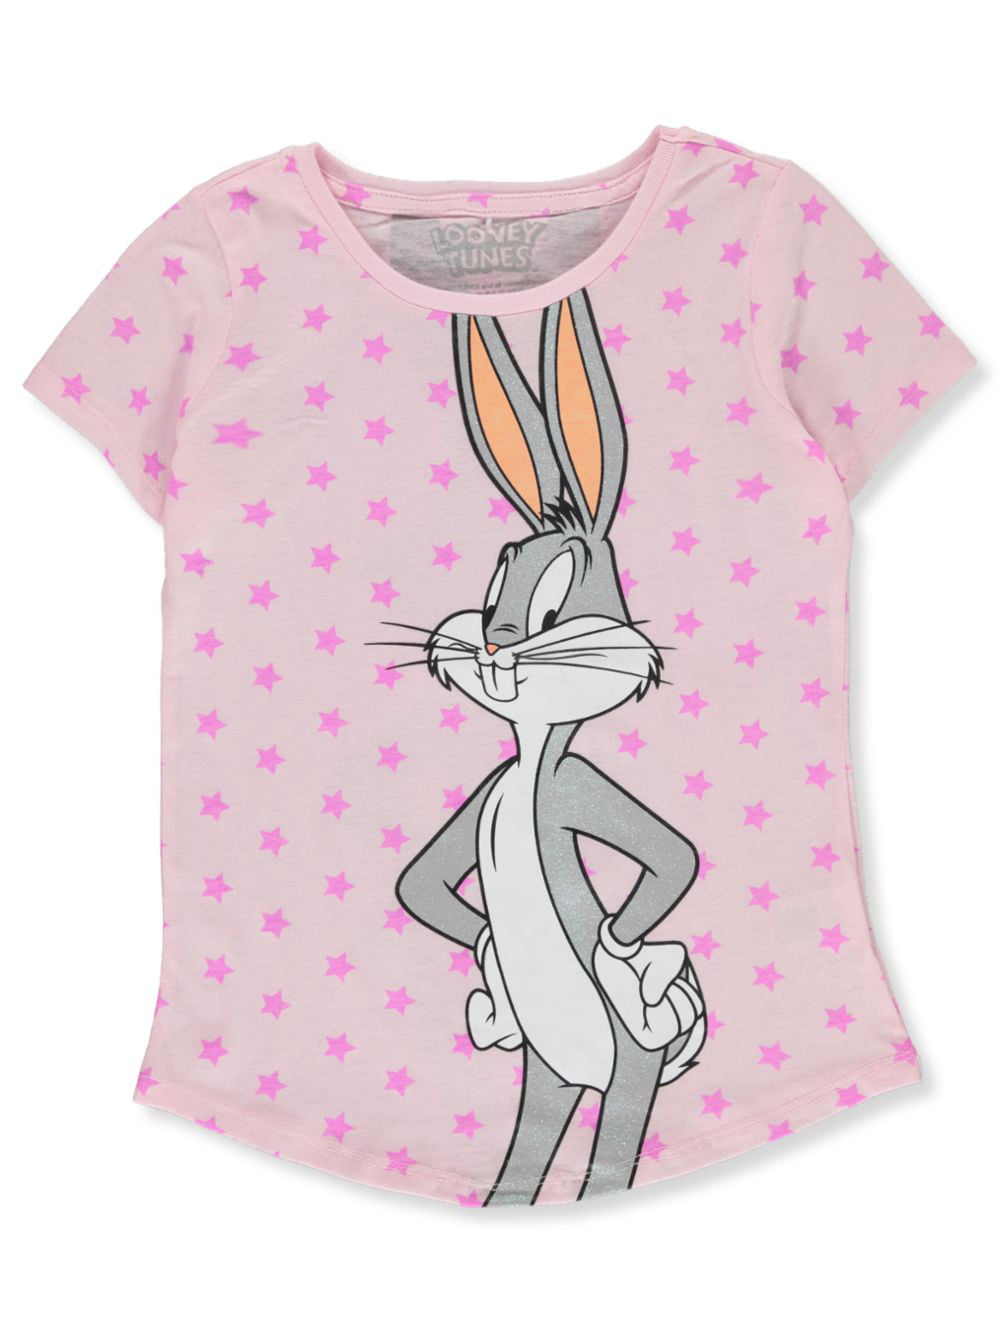 Bunny on Bike 100% Cotton Screen Printed Kids T Shirt Toddler Shirt 